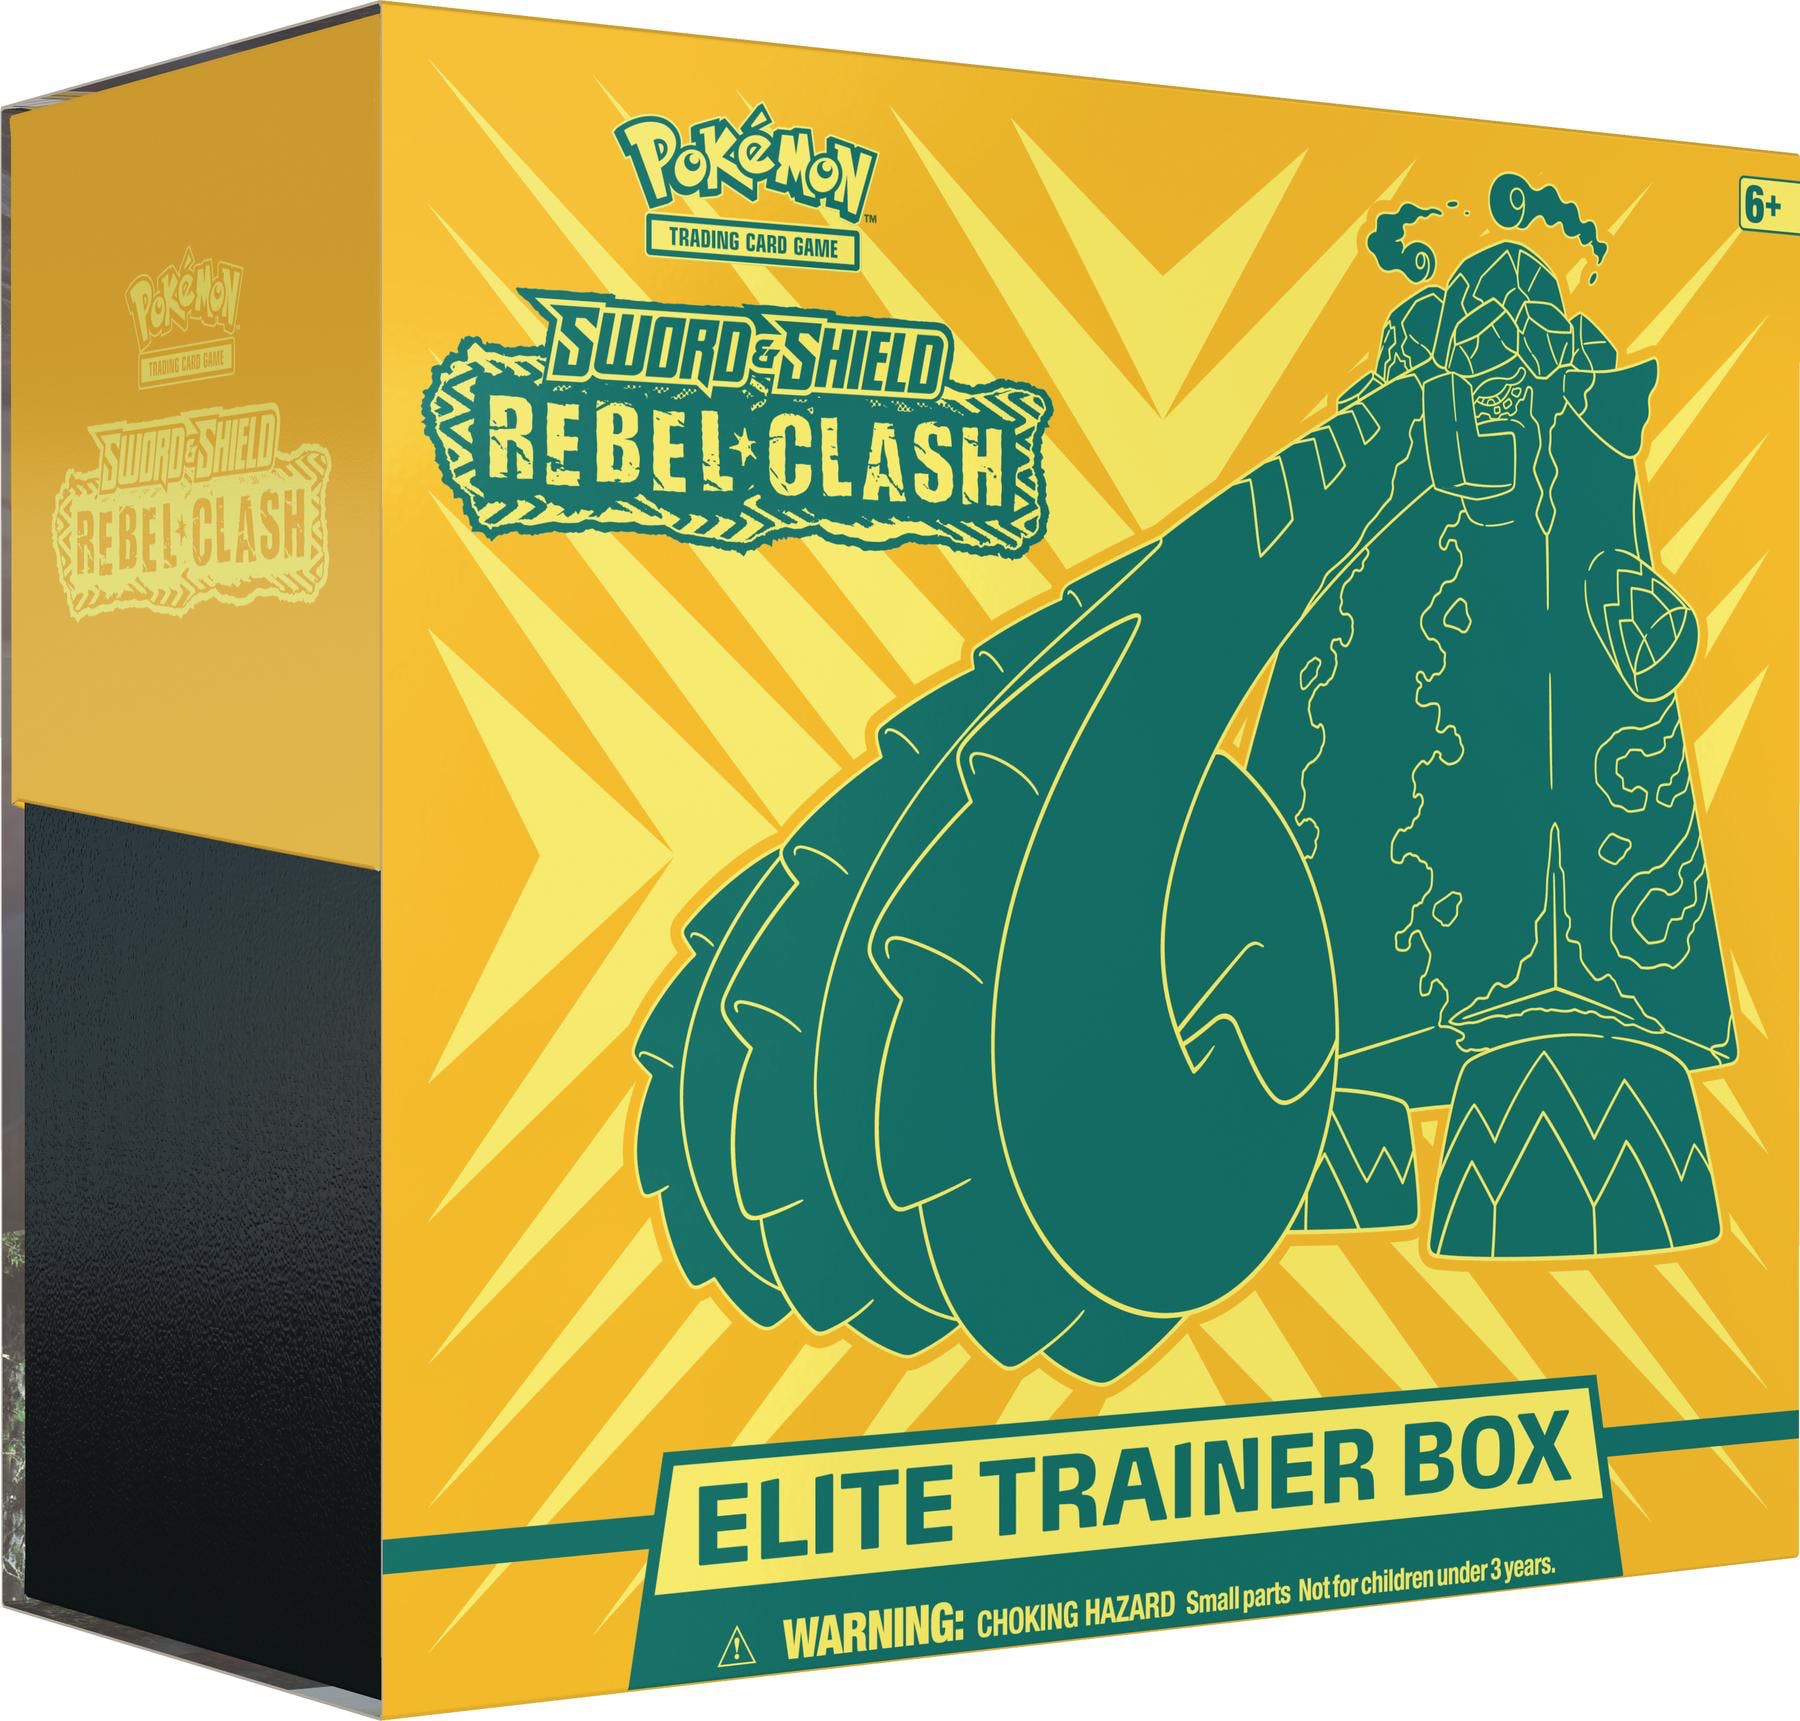 Sword & Shield - Rebel Clash Elite Trainer Box